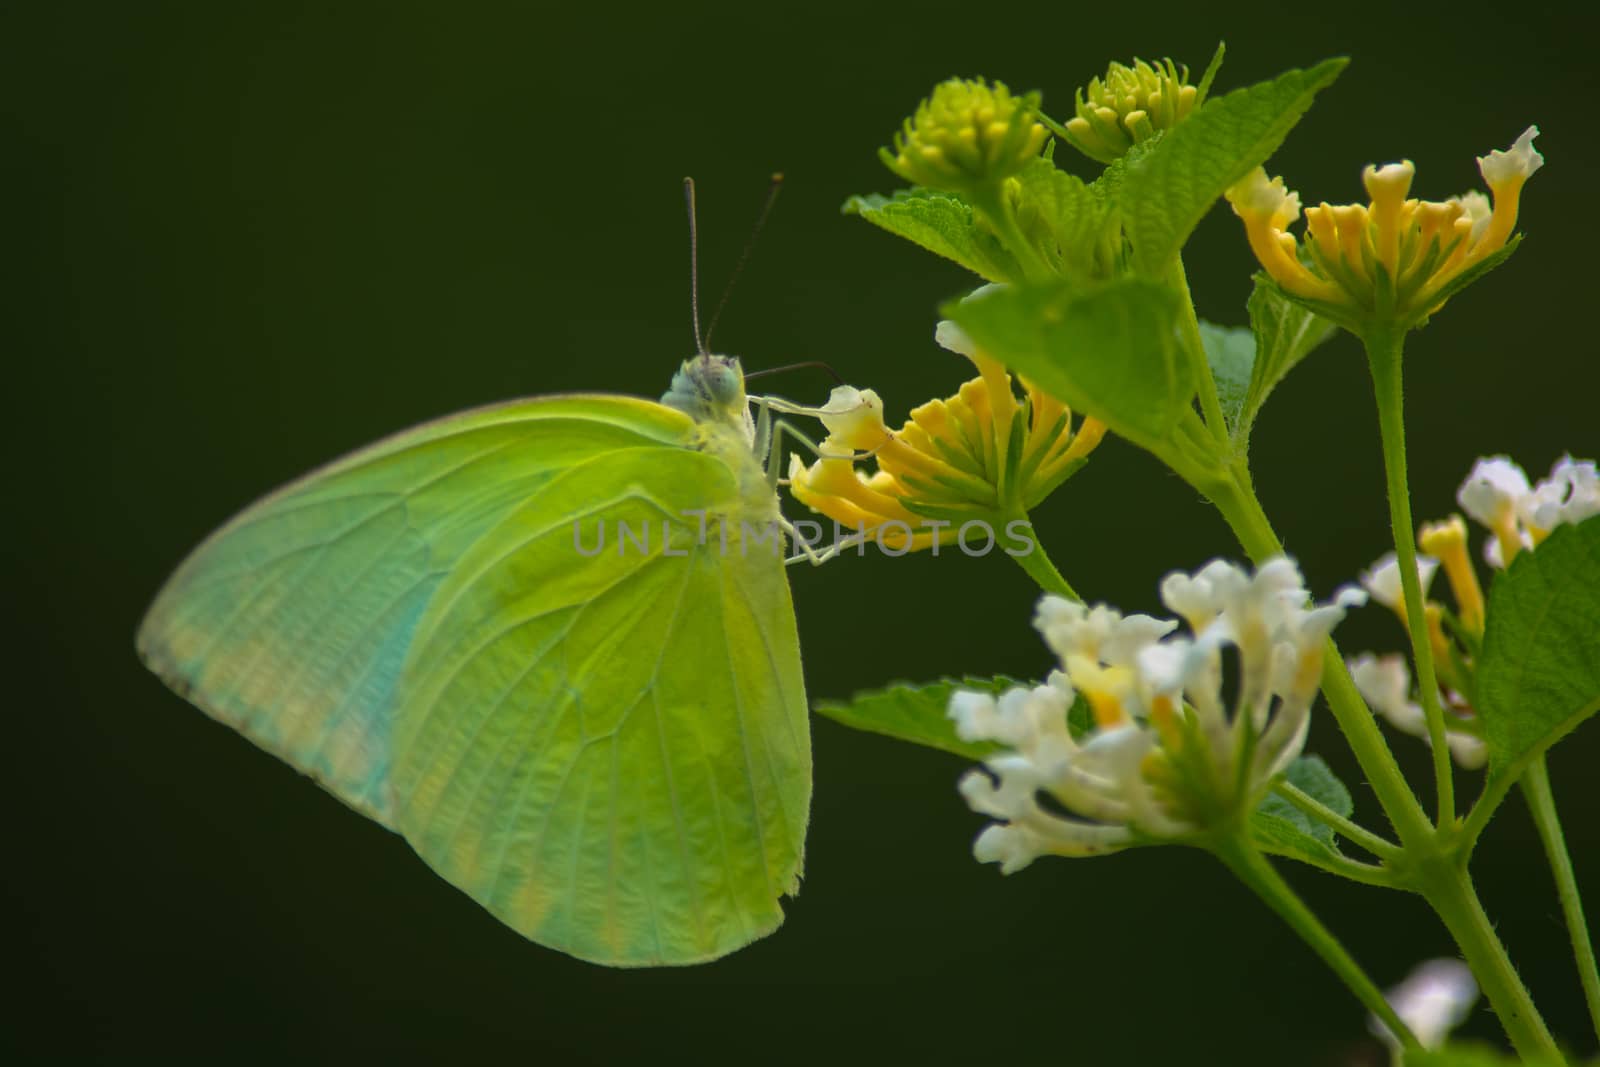 Male Lemon emigrant butterfly, Catopsilia pomona on Lantana flower.